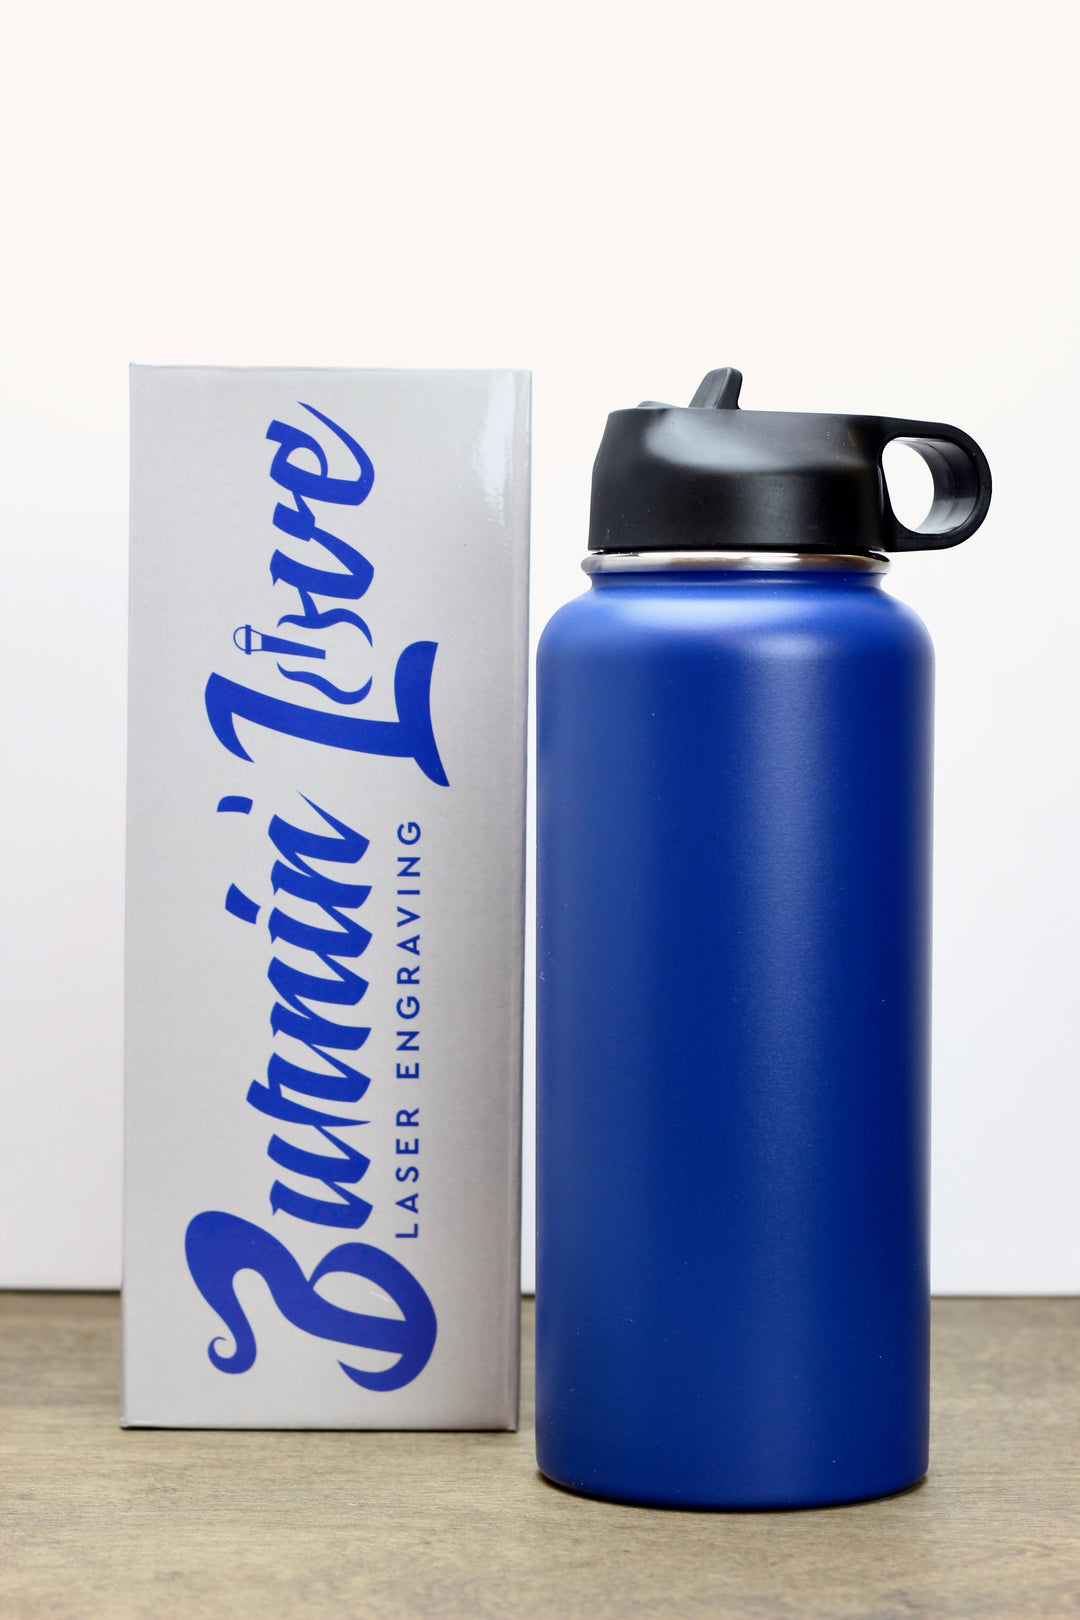 32oz Burnin' Love Laser Engraving Water Bottles - Create your own!